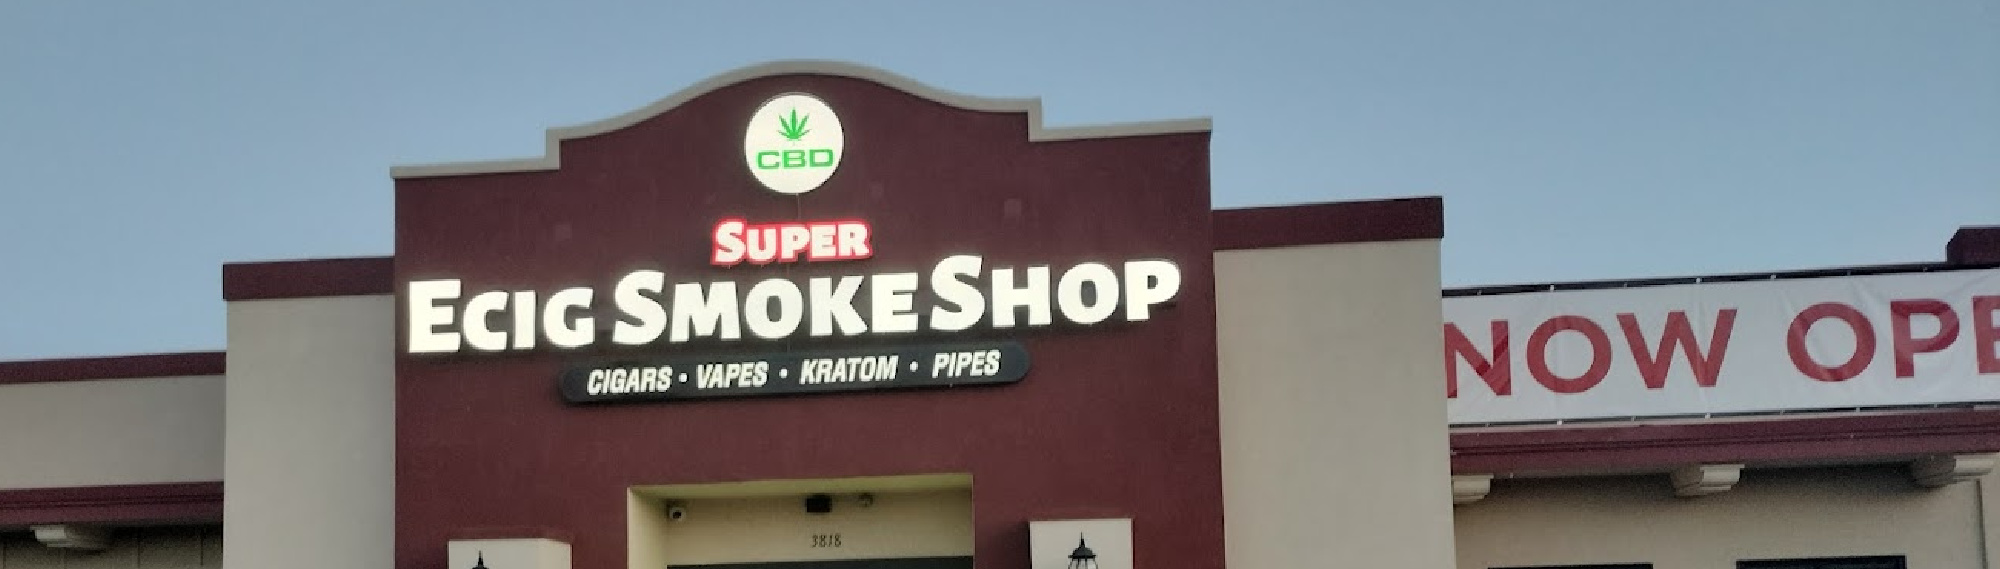 image of super ecig smoke shop in joseph mo